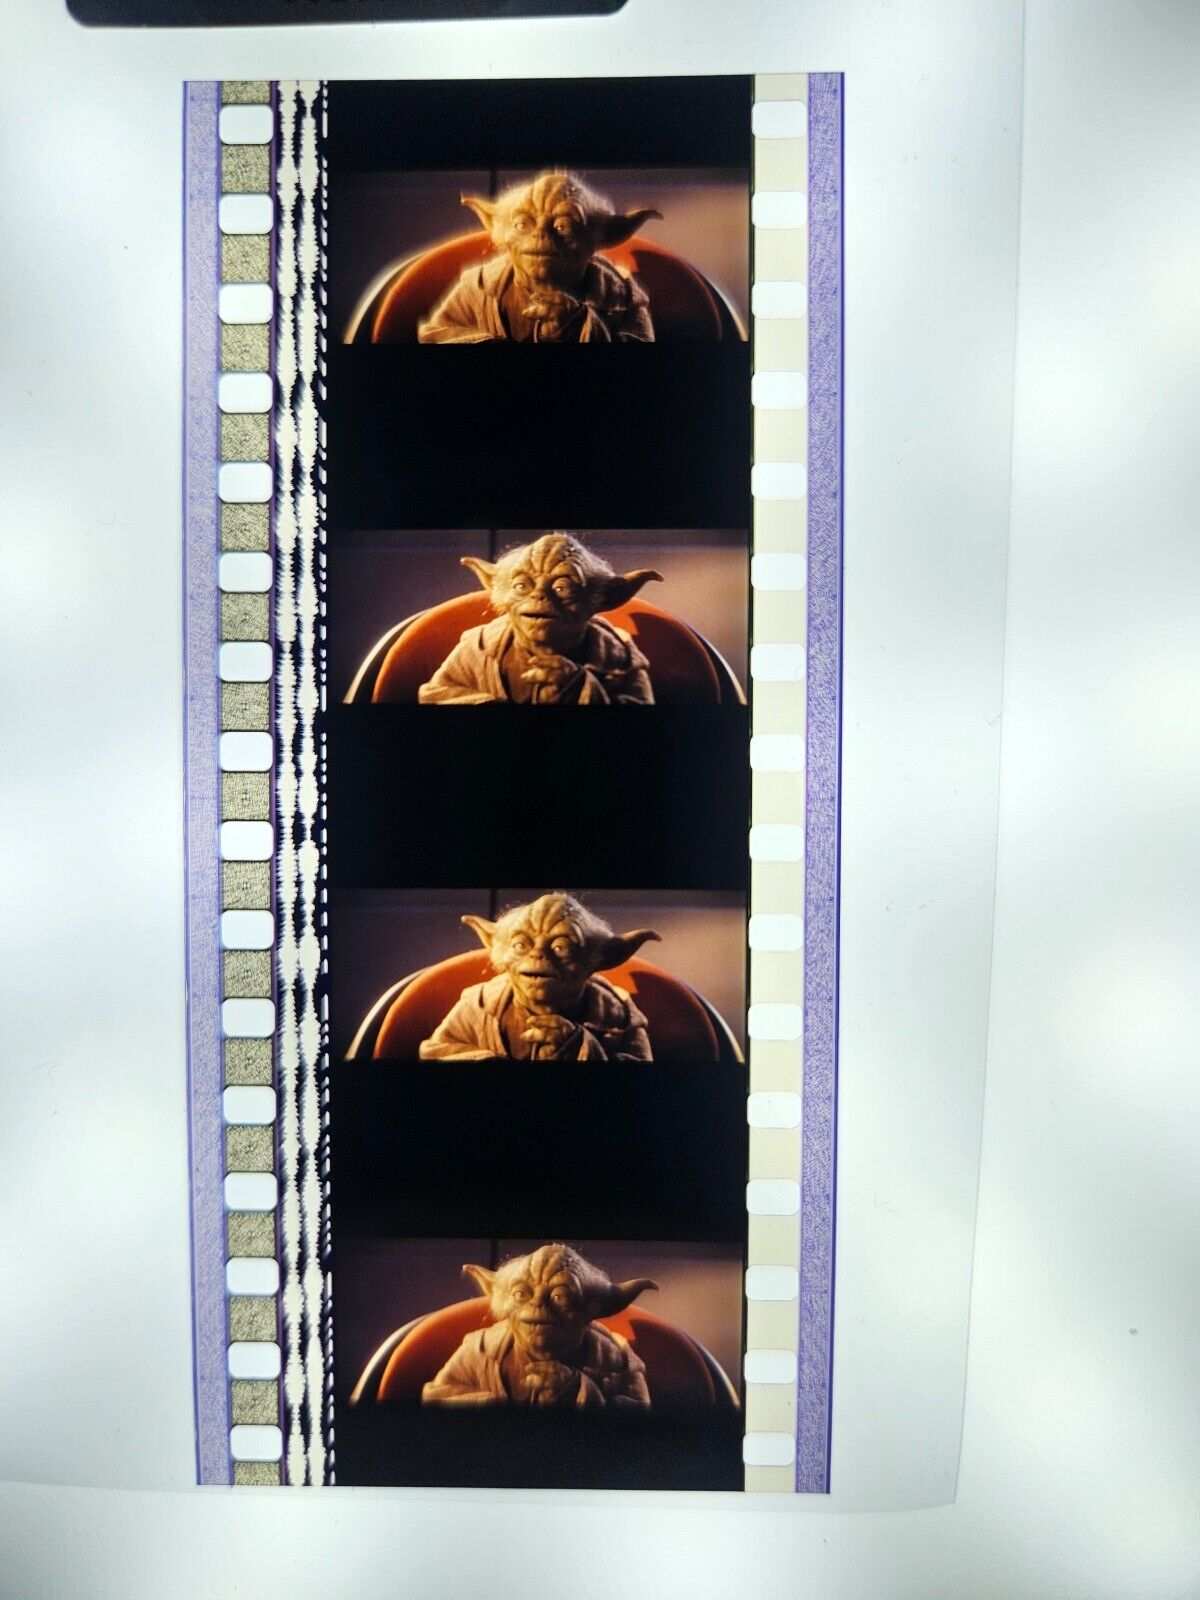 Yoda Star Wars Episode 1 Phantom Menace 35mm Original Film Cells SW2073 Star Wars 35mm Film Cell - Hobby Gems